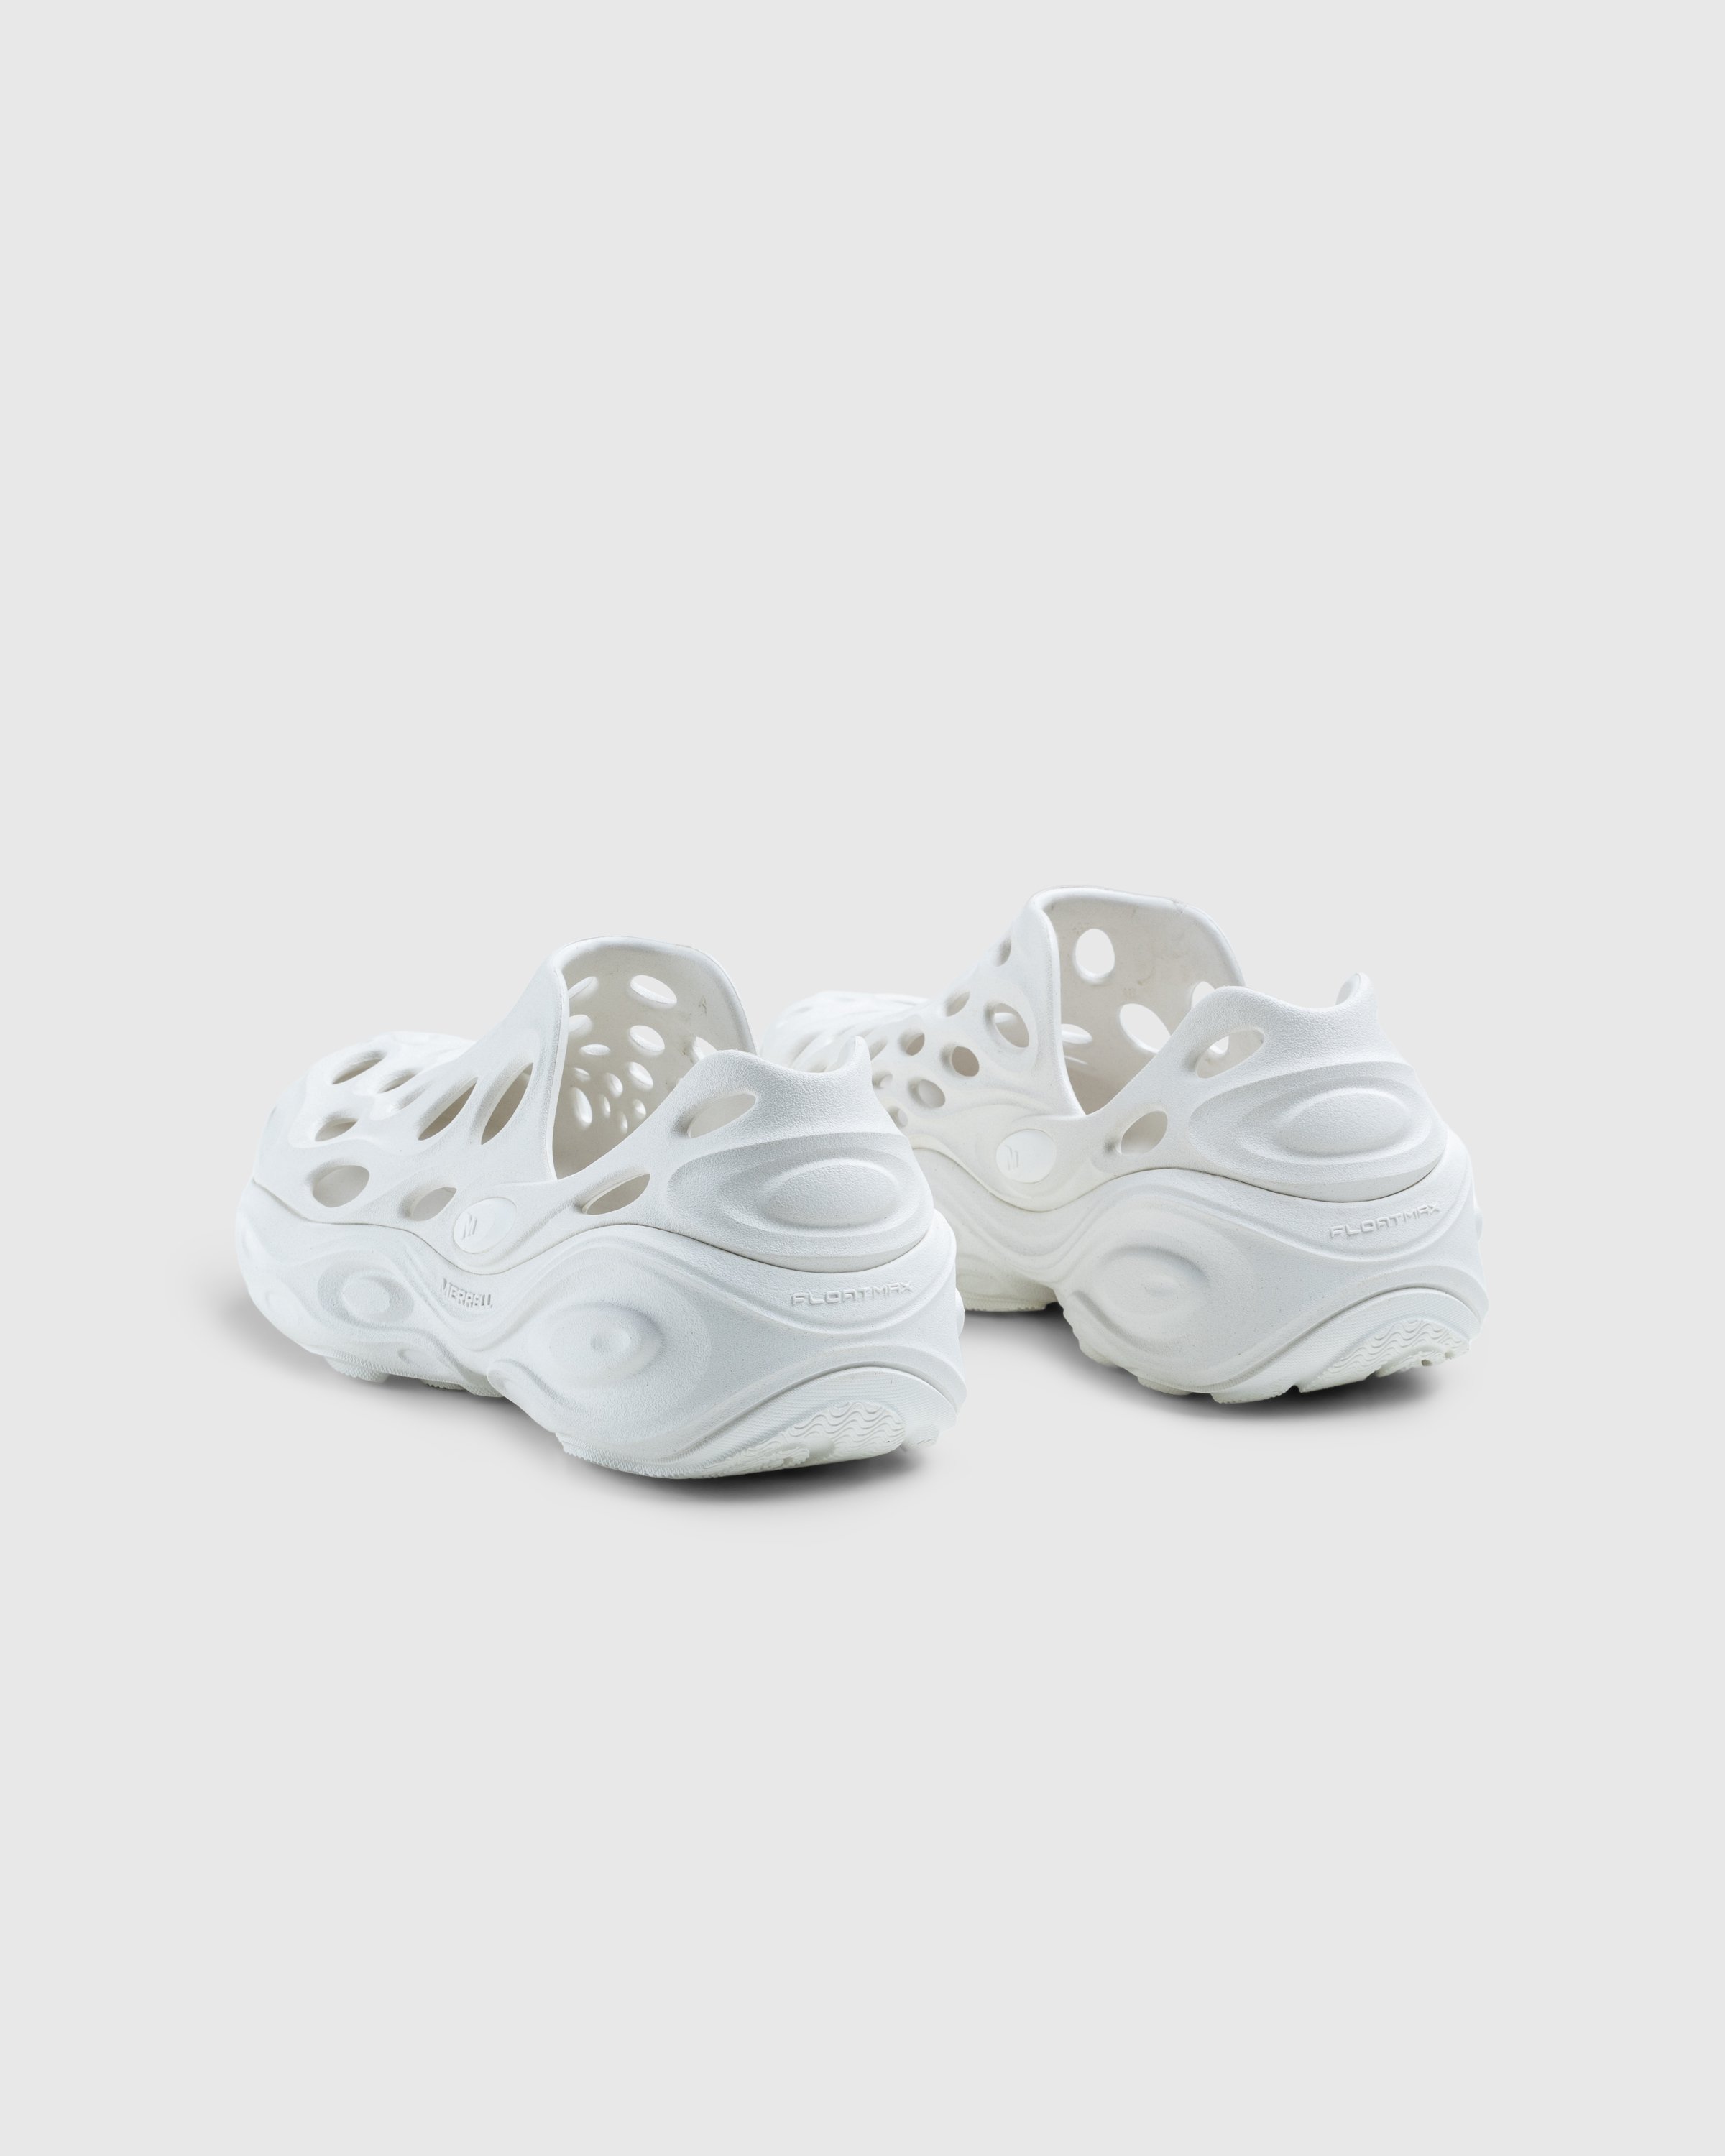 Merrell - HYDRO NEXT GEN MOC SE/TRIPLE WHITE - Footwear - White - Image 4